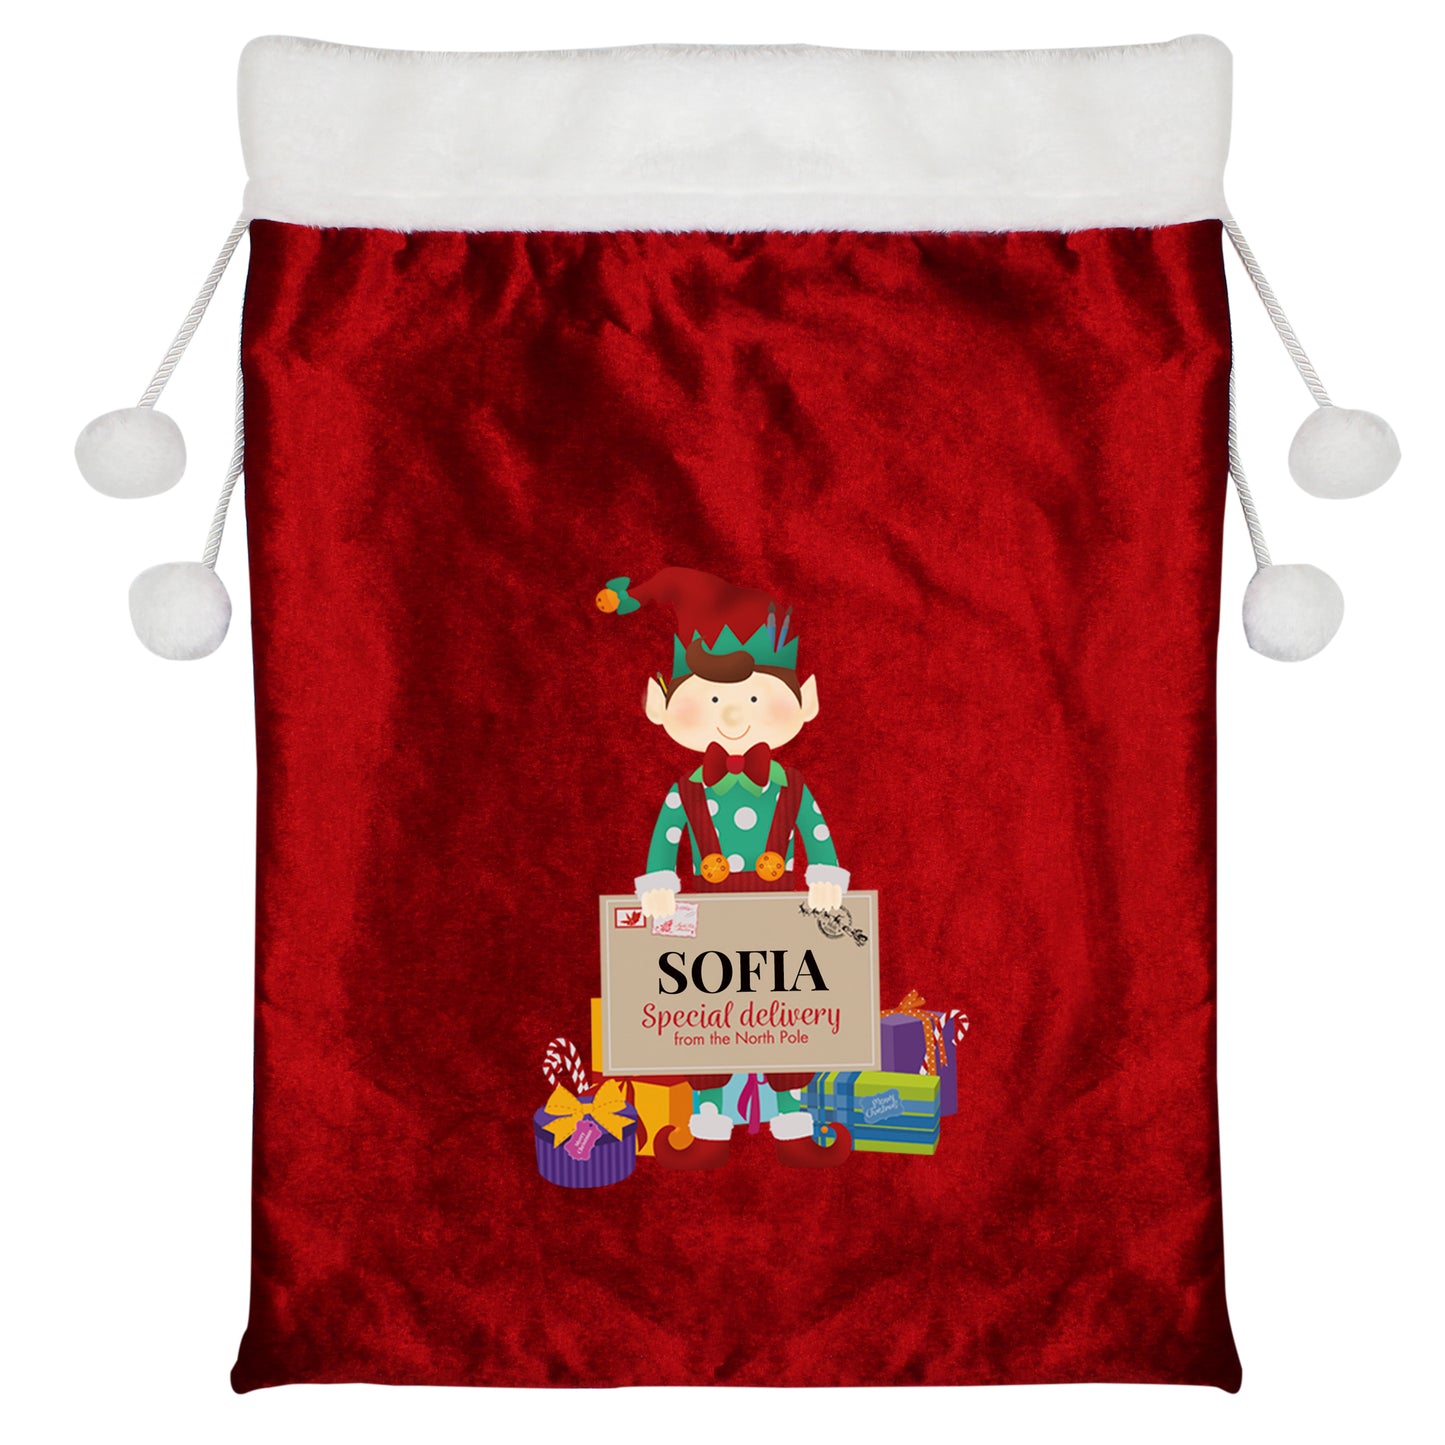 Personalised Christmas Elf Luxury Pom Pom Red Sack - Personalise It!